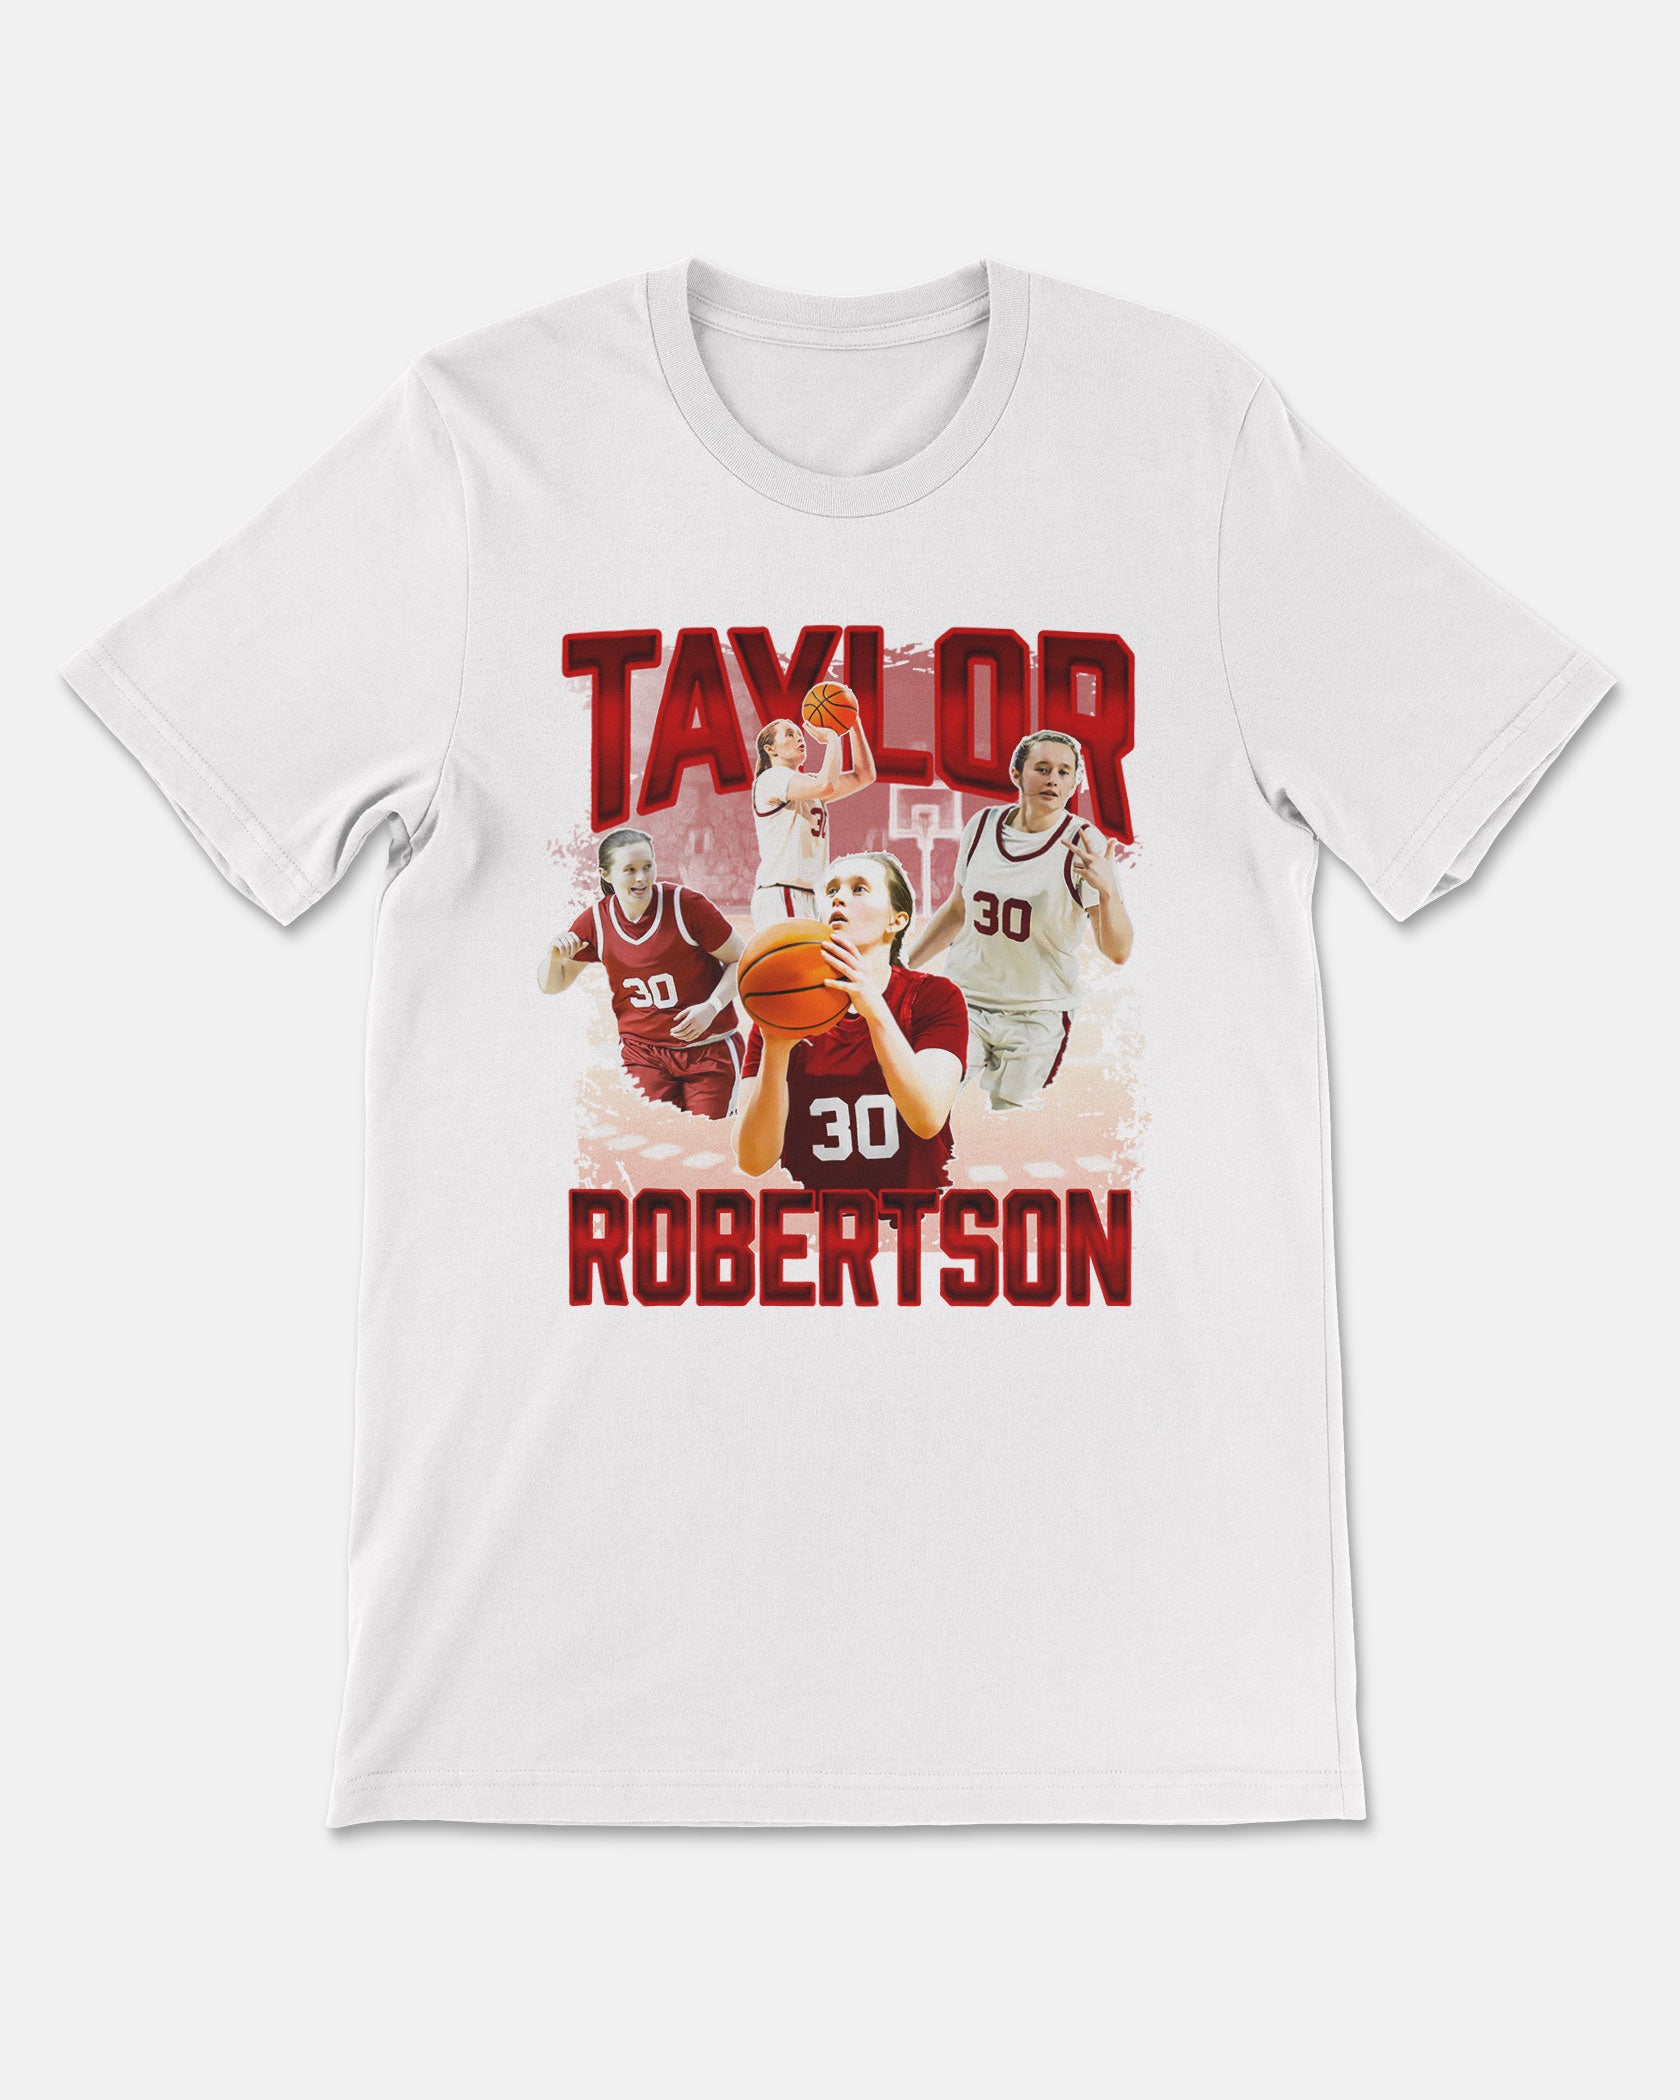 Taylor Robertson Shirt 001